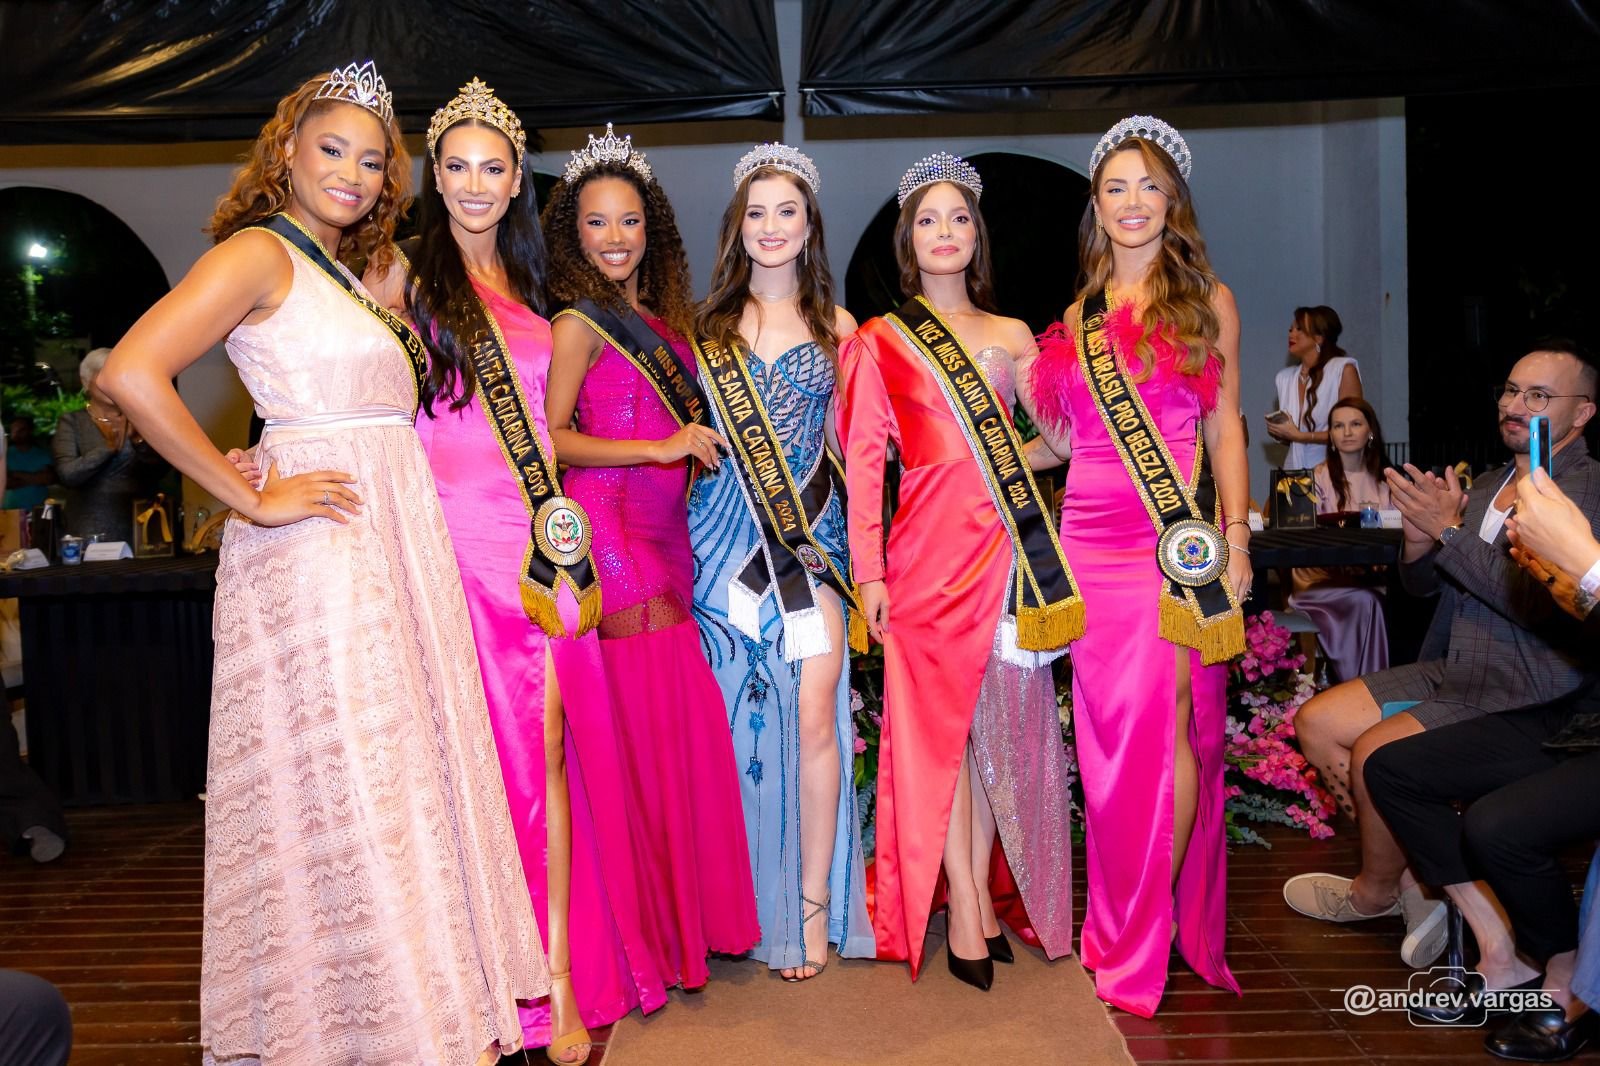 A grande vencedora foi a Miss Cocal do Sul Ludimila Rosso Moraes coroada Miss Santa Catarina